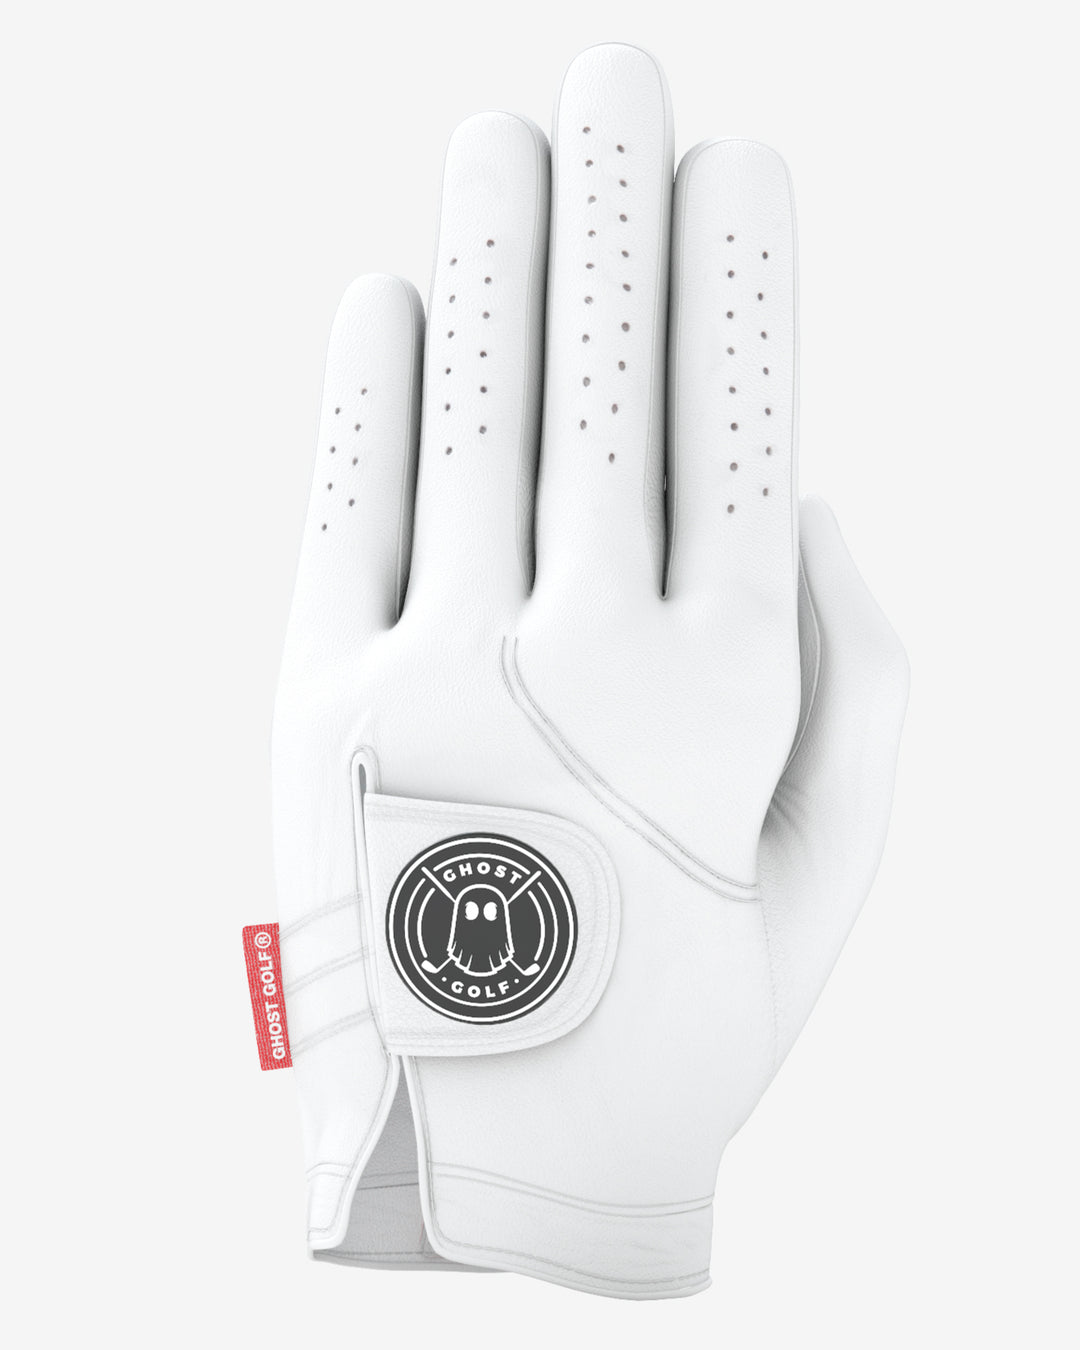 Ghost Golf AAA Cabretta Golf Glove Color White